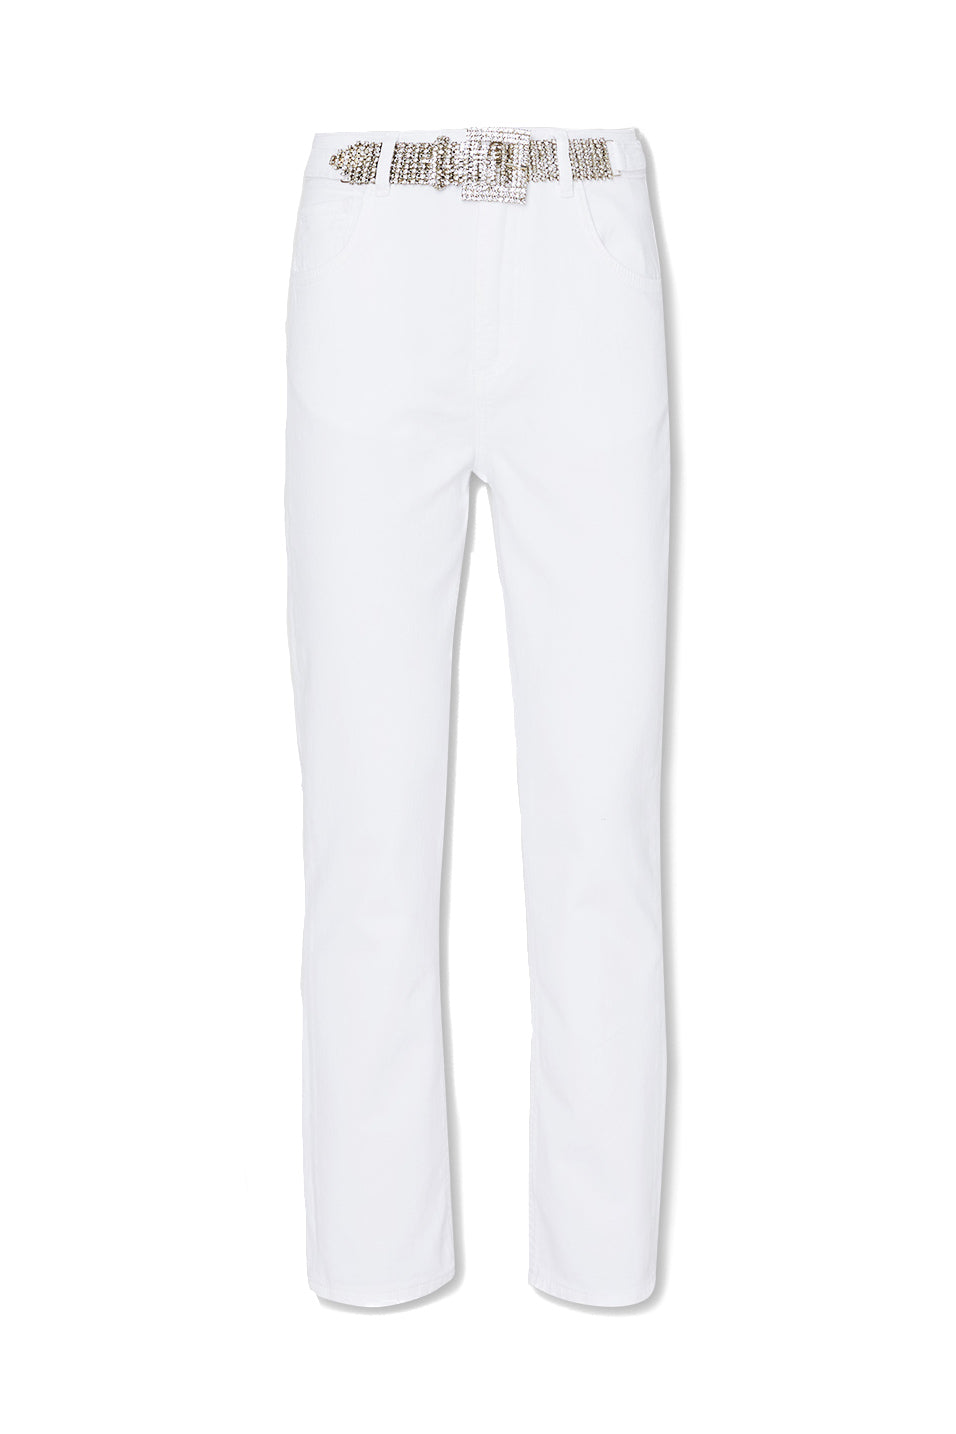 LIU JO Jeans straight Bottom Up bianchi in cotone con cintura - Mancinelli 1954